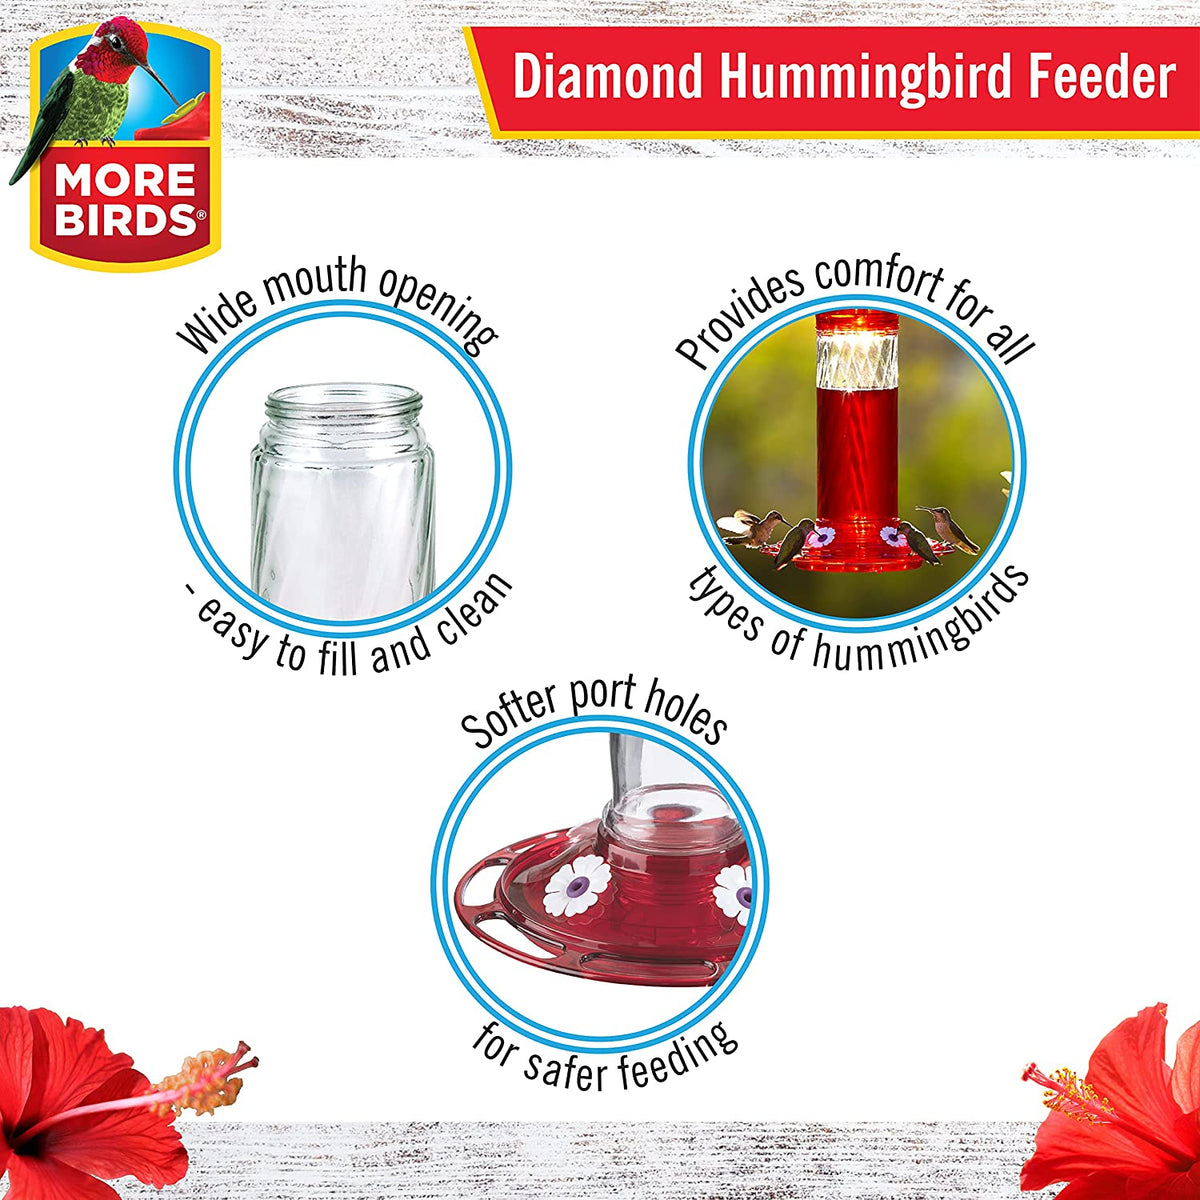 More Birds 37 Diamond Hummingbird Feeder with Ant Moat, 5 Ports, 30 Oz